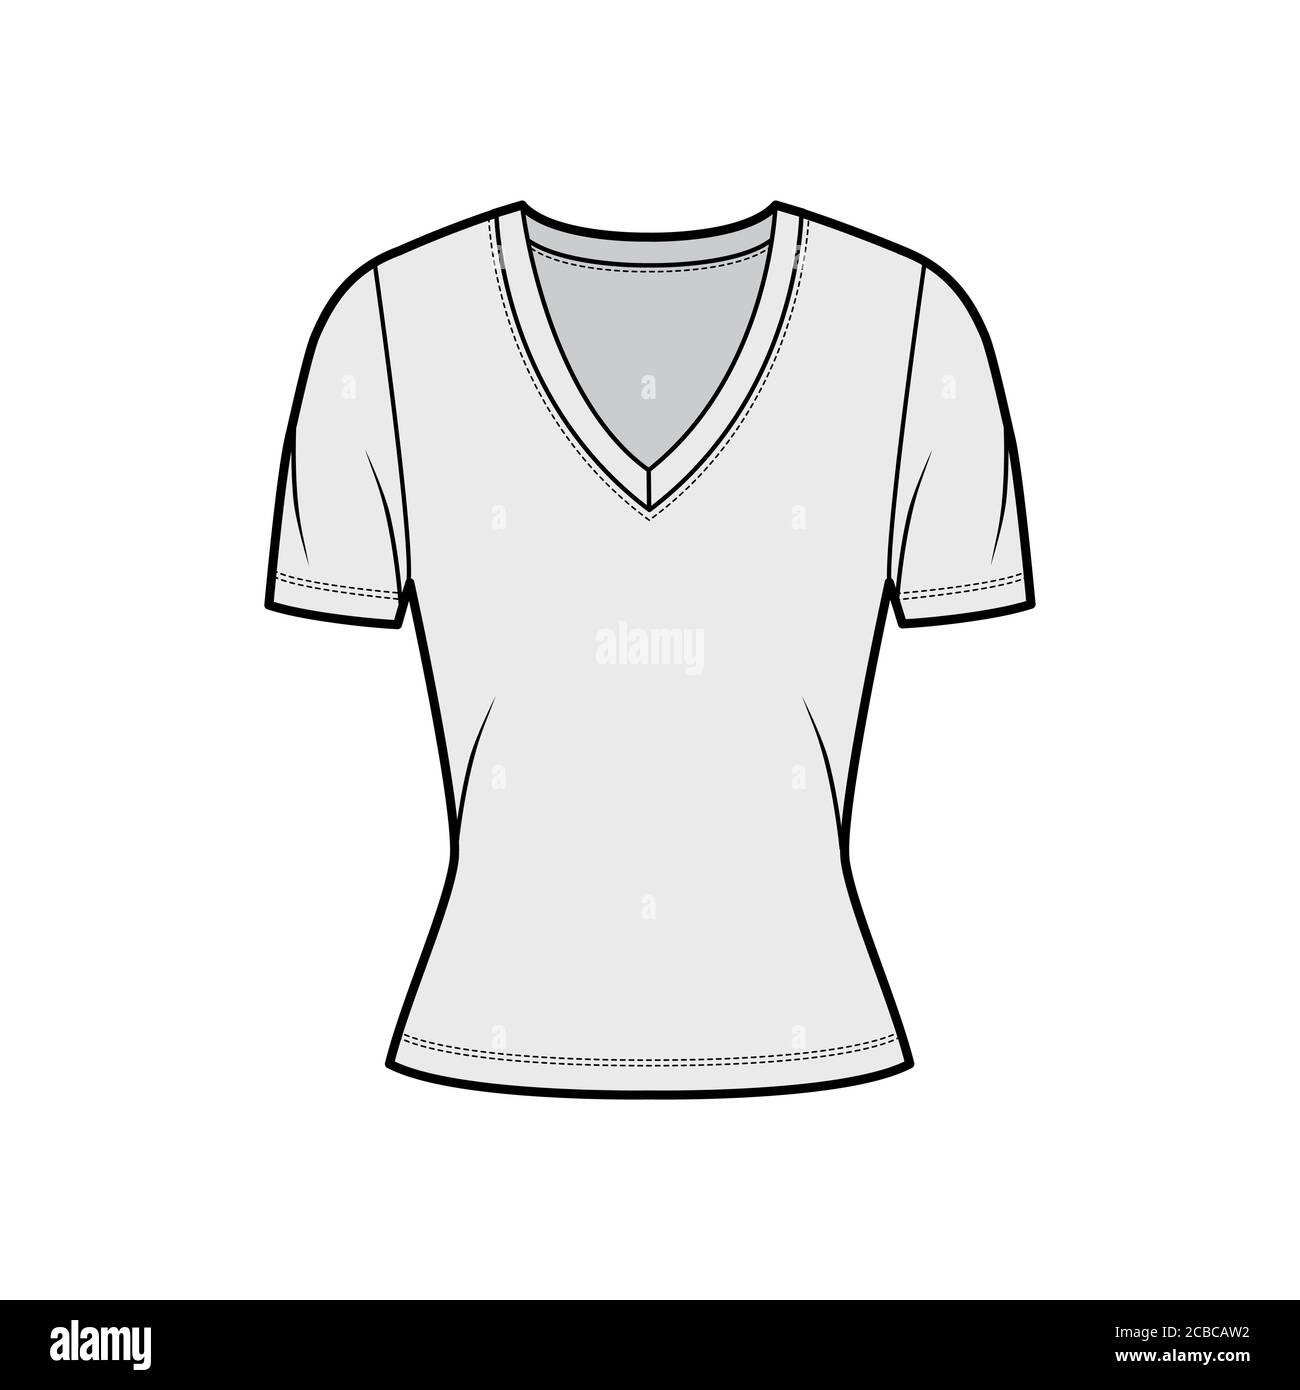 Sports jersey t-shirt design v neck shorts sleeve Vector Image